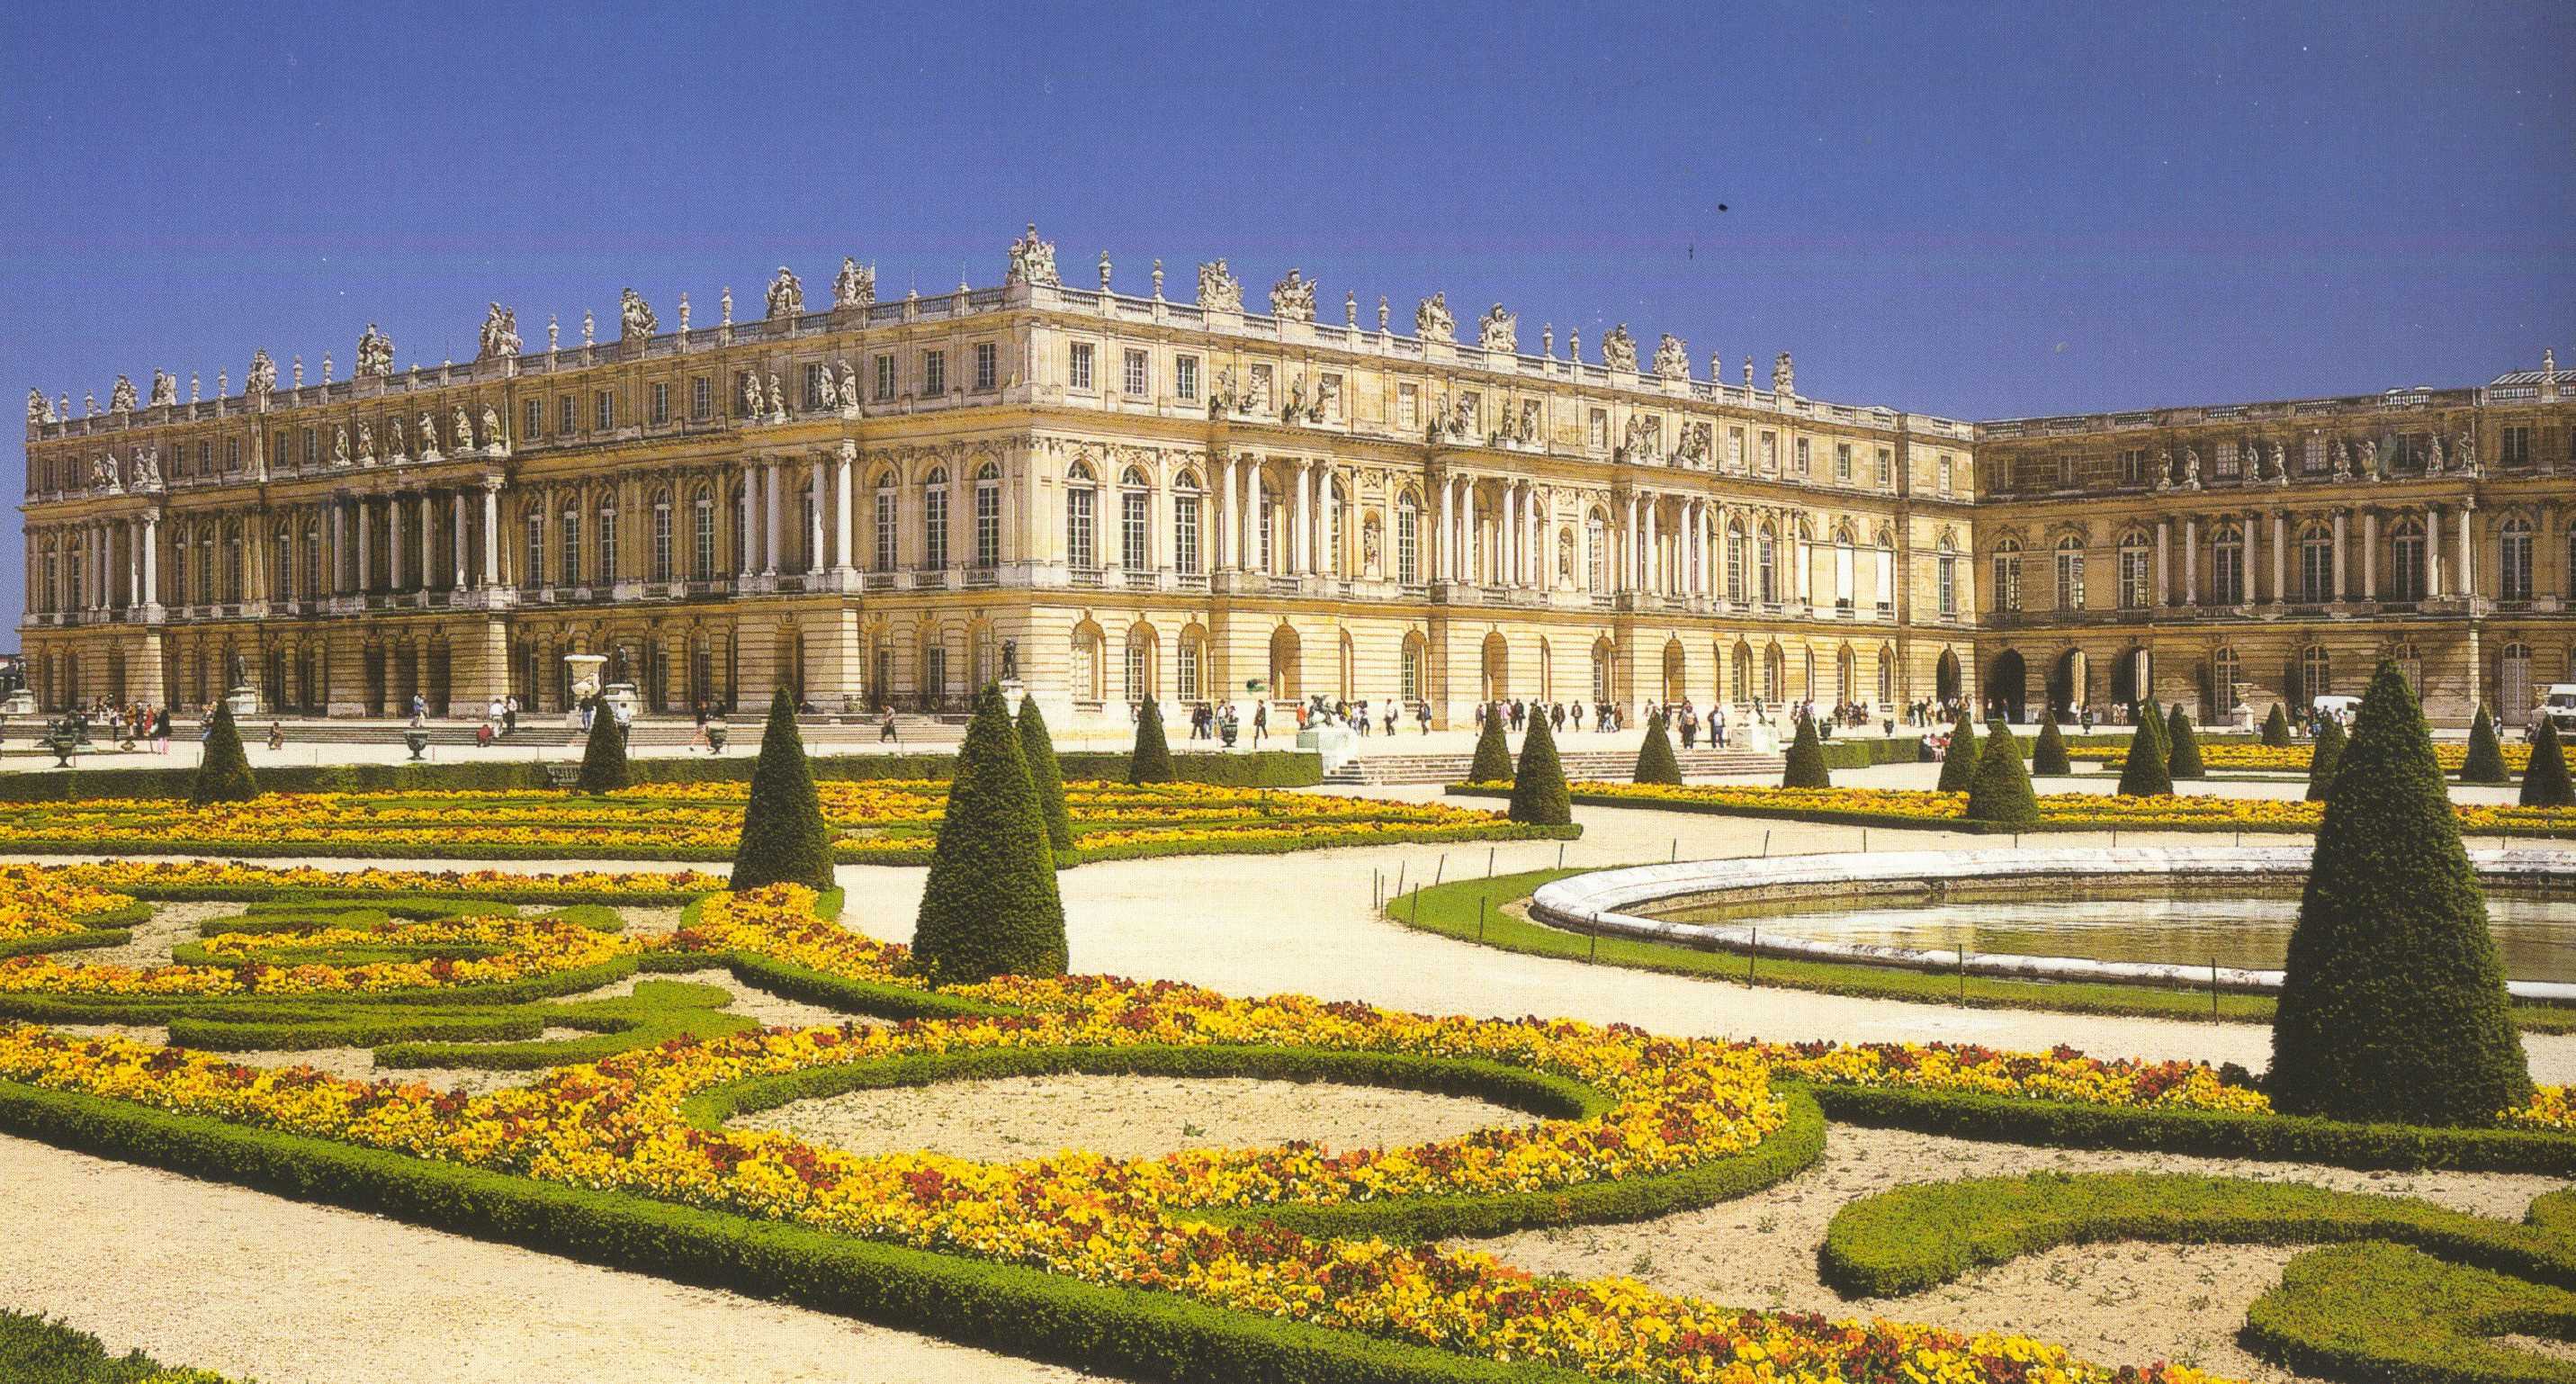 Про версаль. Жюль Ардуэн-мансар Версаль. Версальский дворец Луи лево. Луи лево Жюль Ардуэн-мансар дворец в Версале. Версальский дворец (Франция) – Жюль мансар.